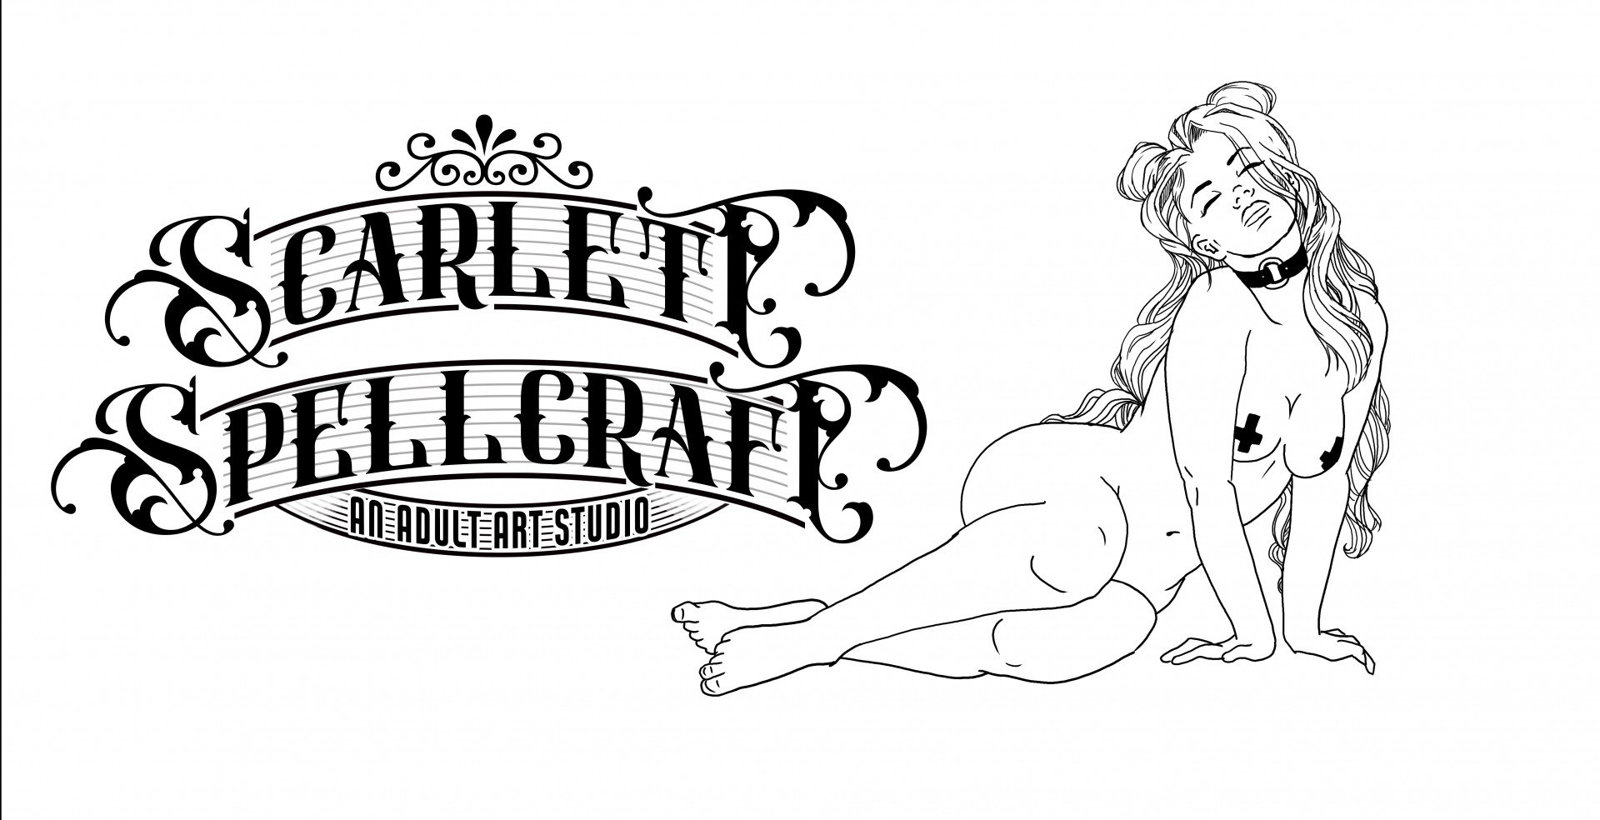 Cover photo of ScarlettSpellcraft